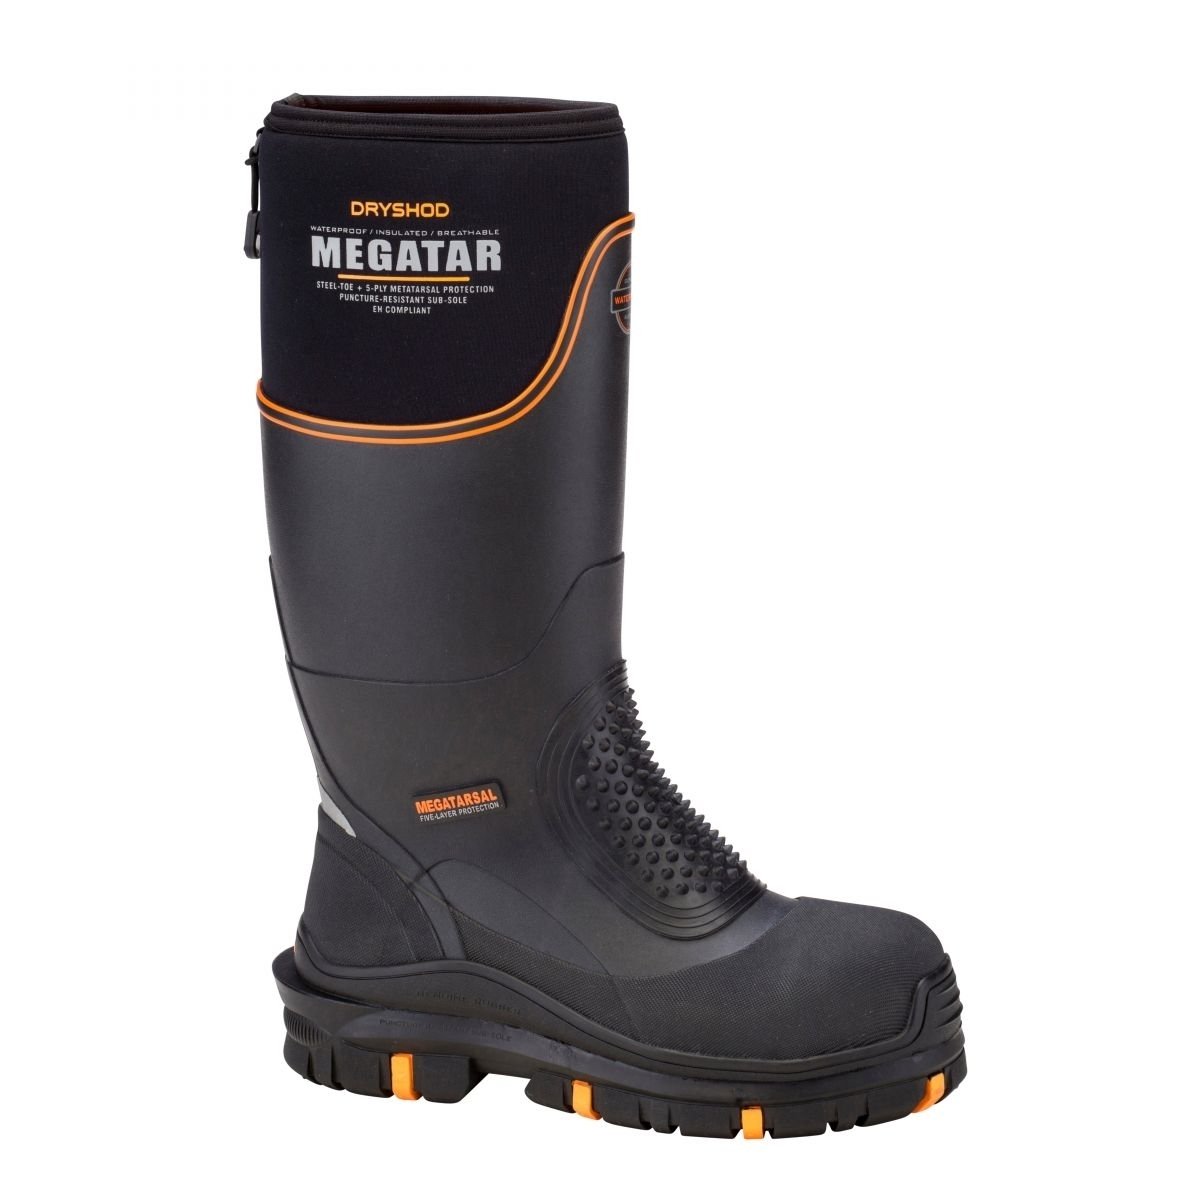 Dryshod Men's Megatar Steel Toe Metatarsal Guard Work Boot Black - MEG-MH-BK ONE SIZE BLACK/ORANGE - BLACK/ORANGE, 13